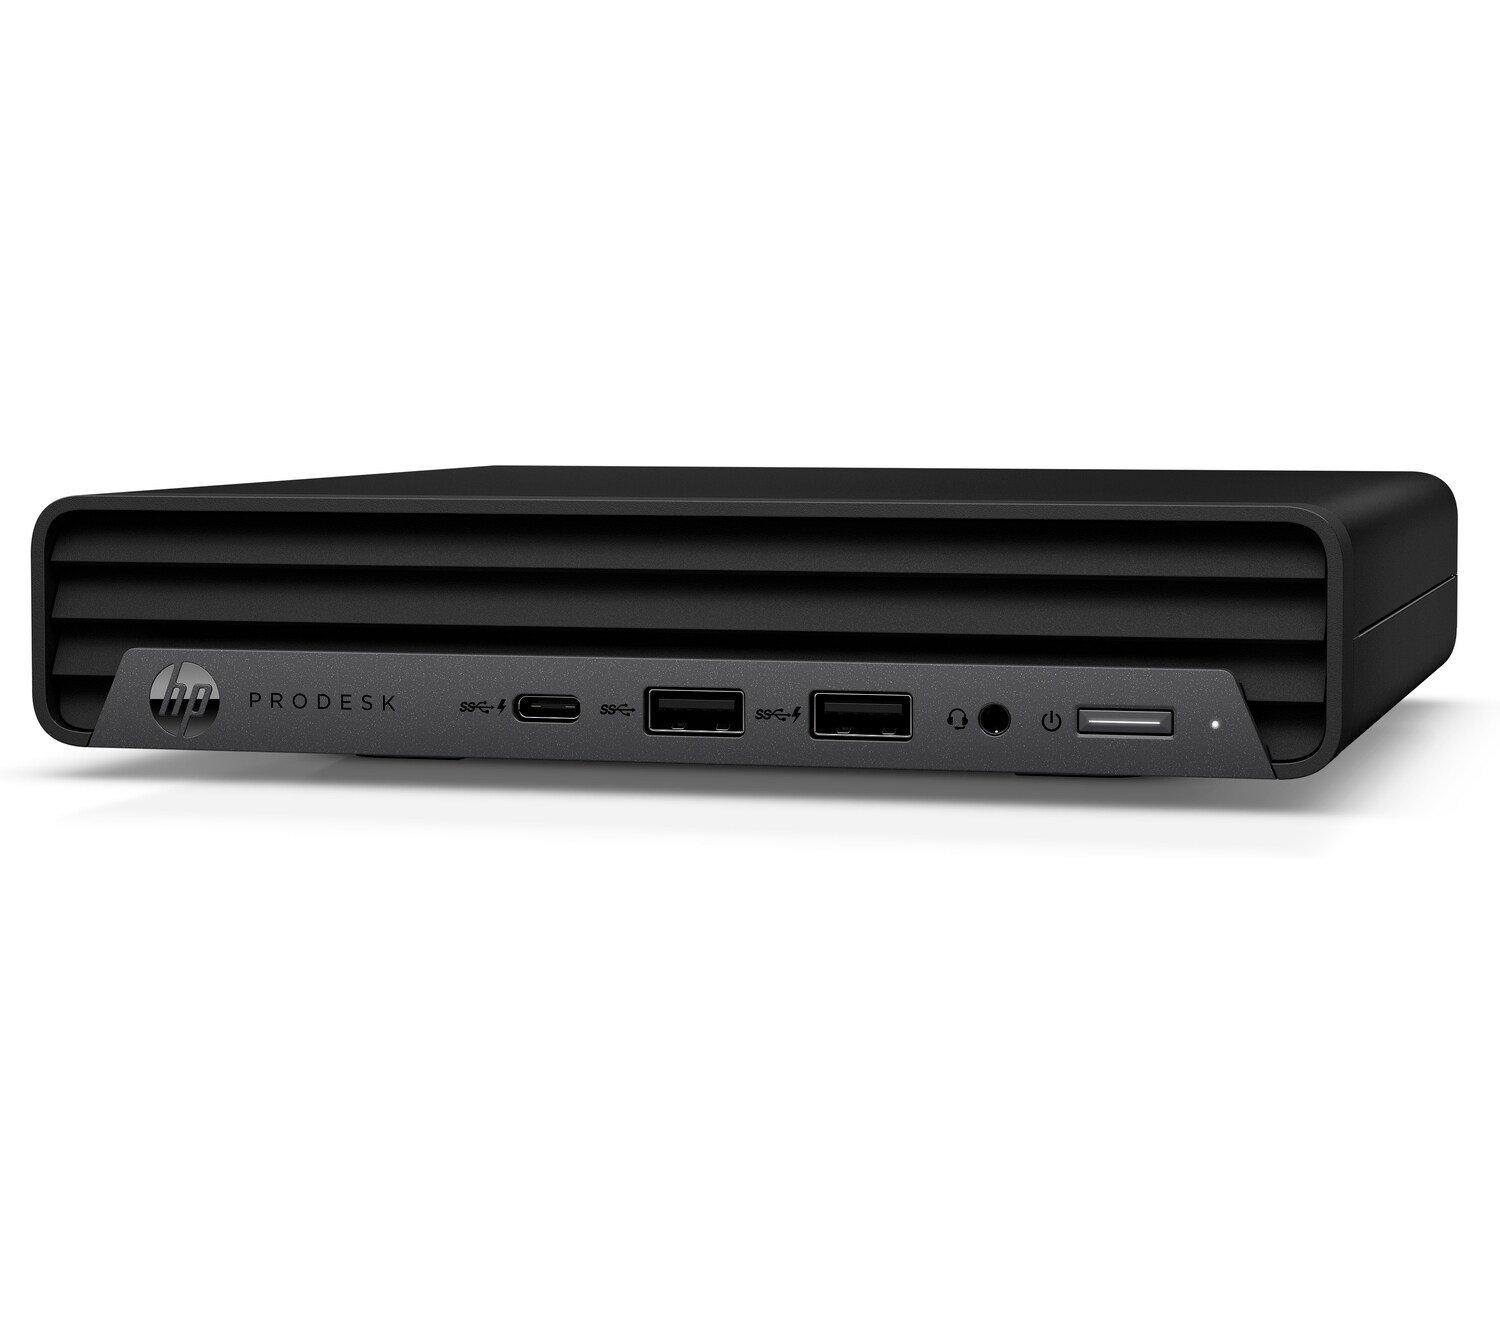 HP ProDesk 400 G6 Mini i7-10700T 4.5GHz 8GB RAM 256GB SSD WiFi Mini Form Factor Desktop with Windows 10 Pro